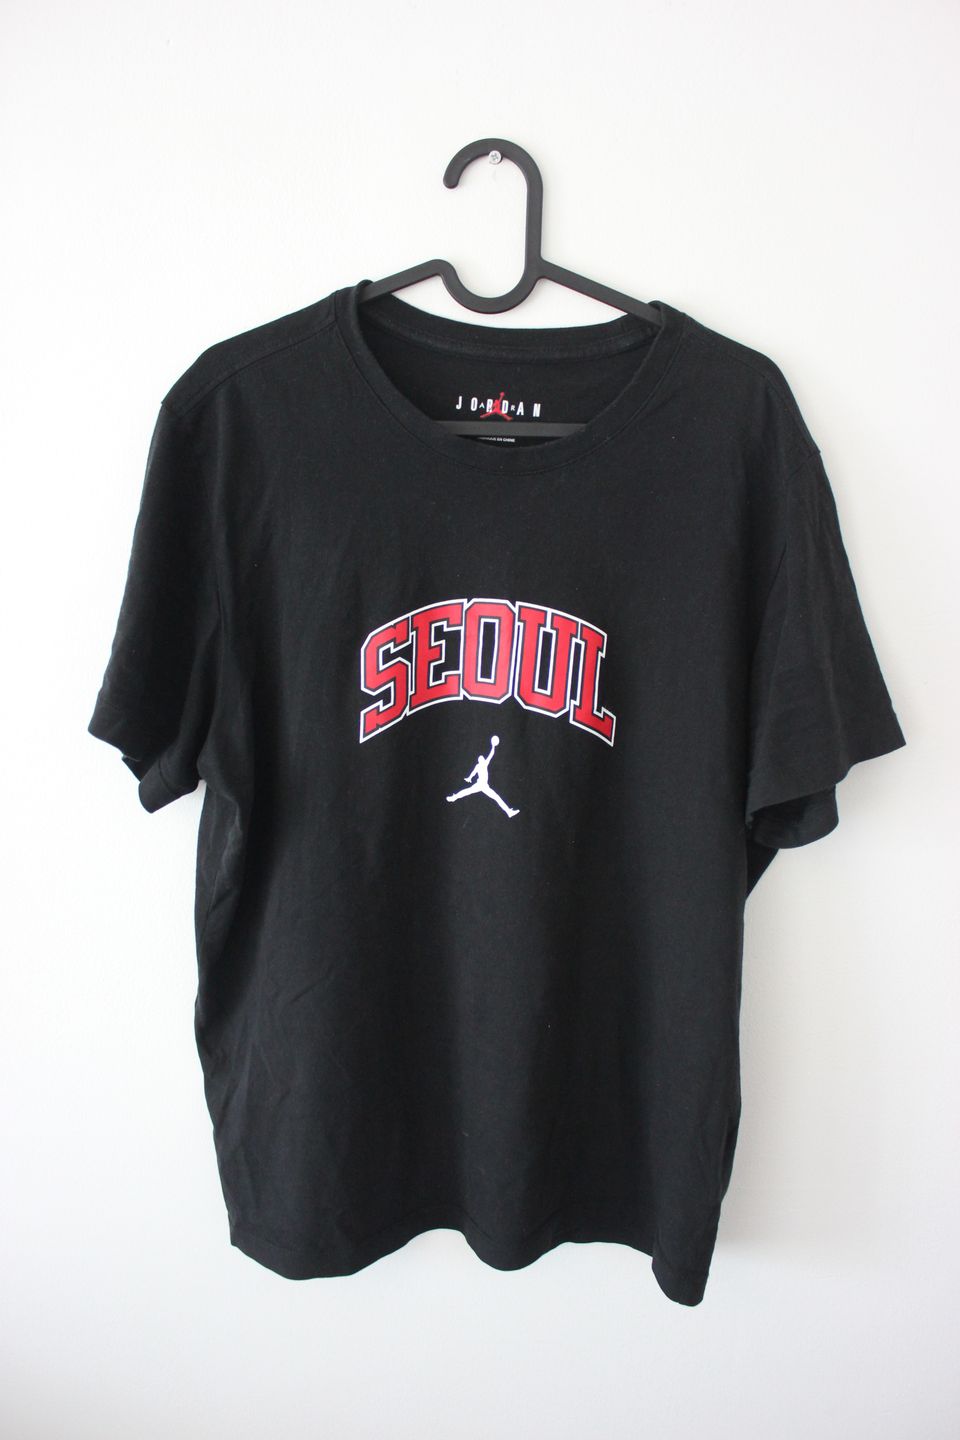 Jordan T-shirt (Seoul edition)